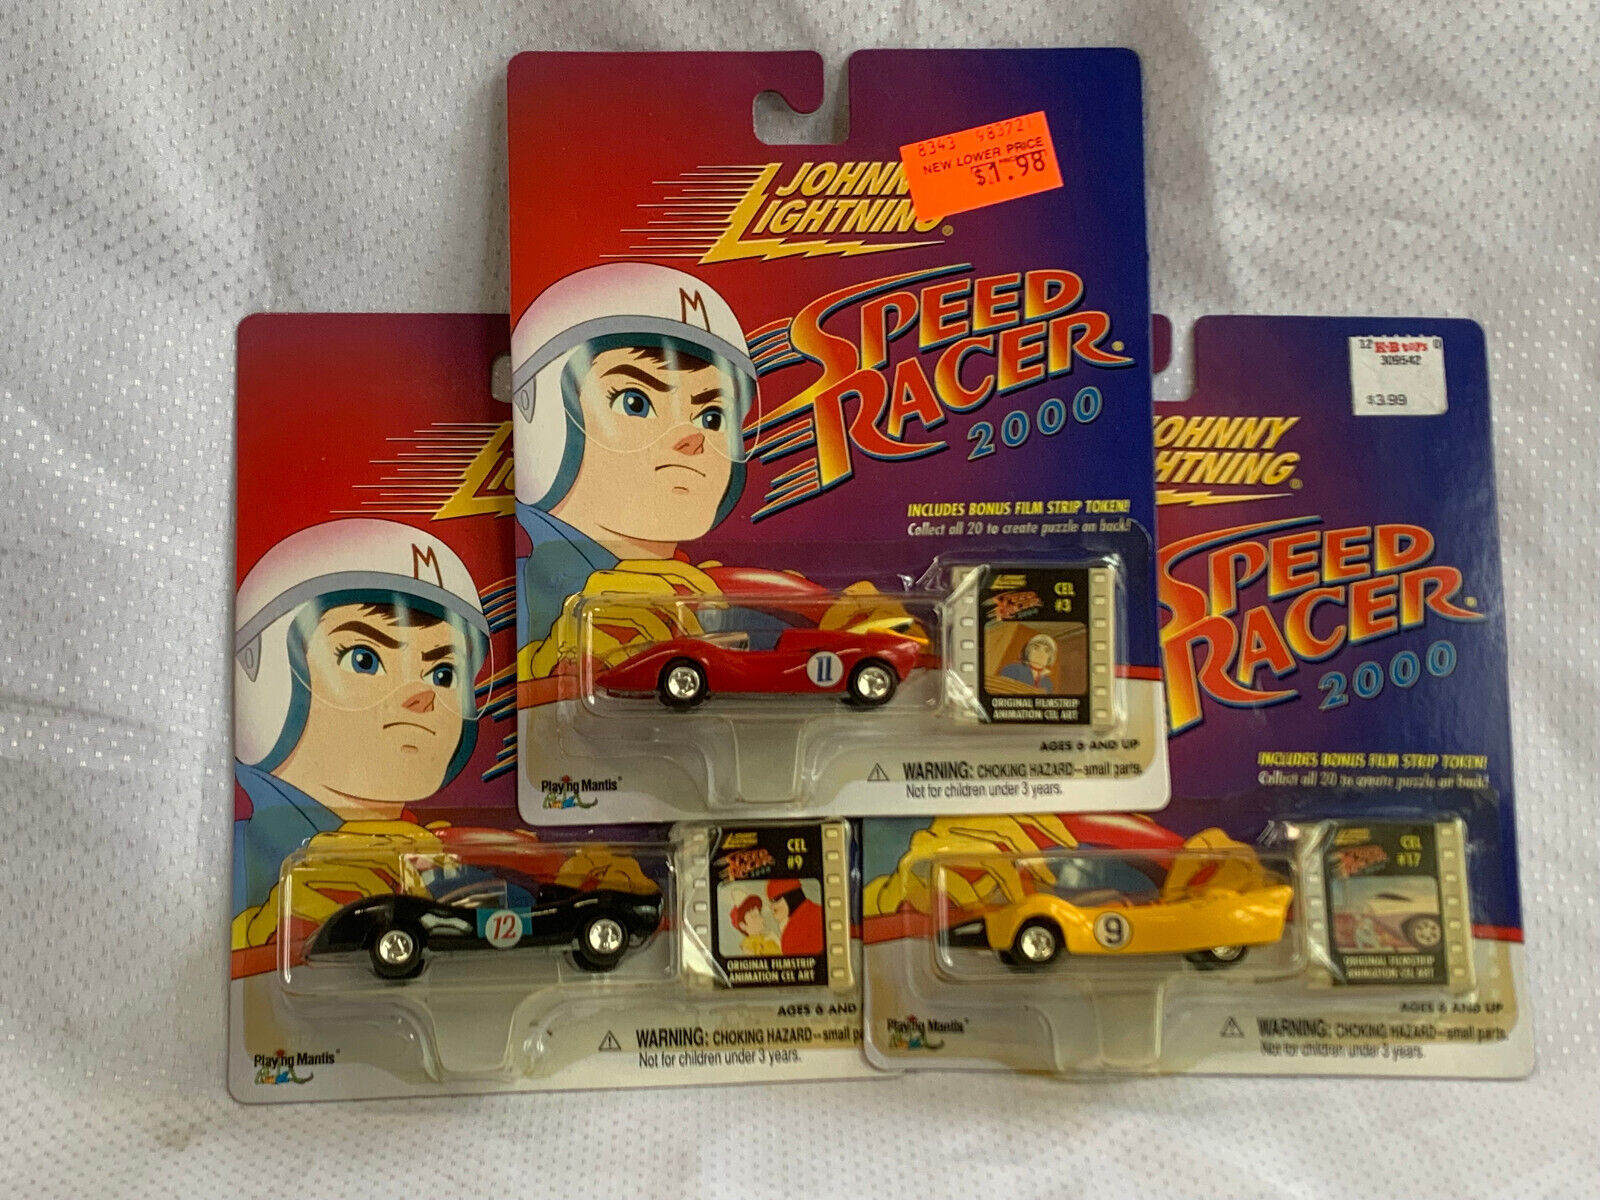 2000 Playing Mantis Inc Johnny Lightning Speed Racer 2000 Diecast Vehicle Lot - $29.65